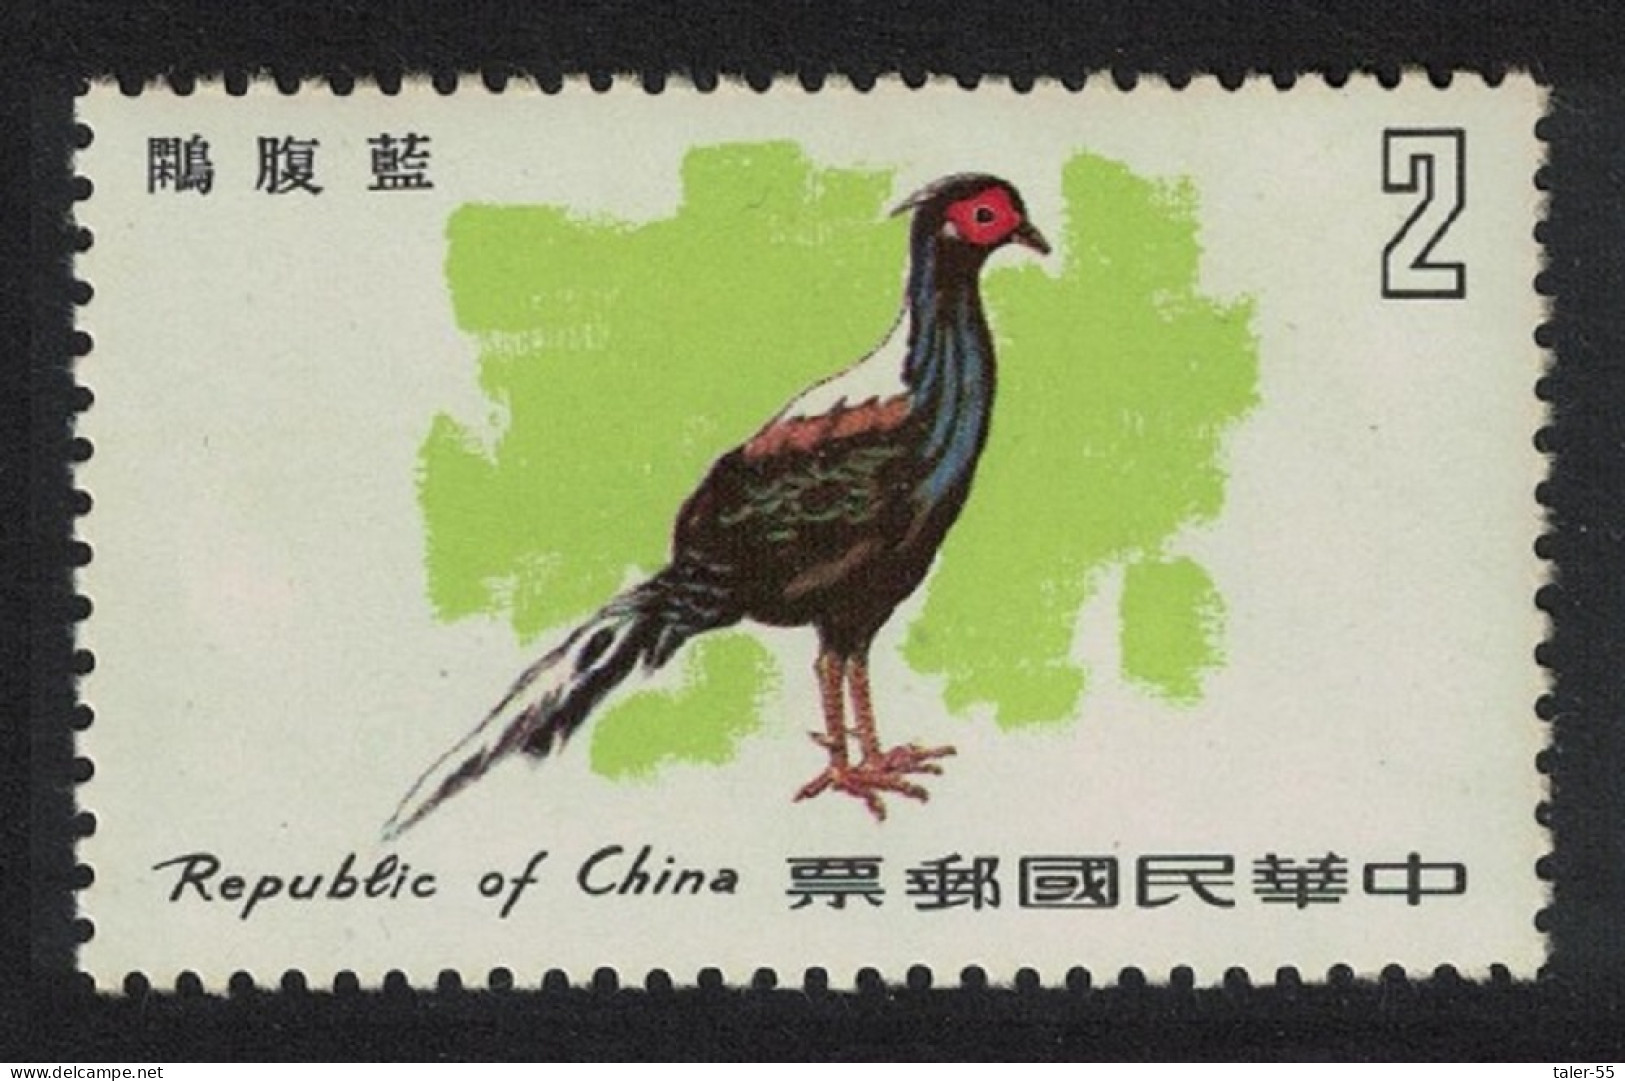 Taiwan Swinhoe's Pheasant $2 DEF 1979 SG#1264 - Ongebruikt